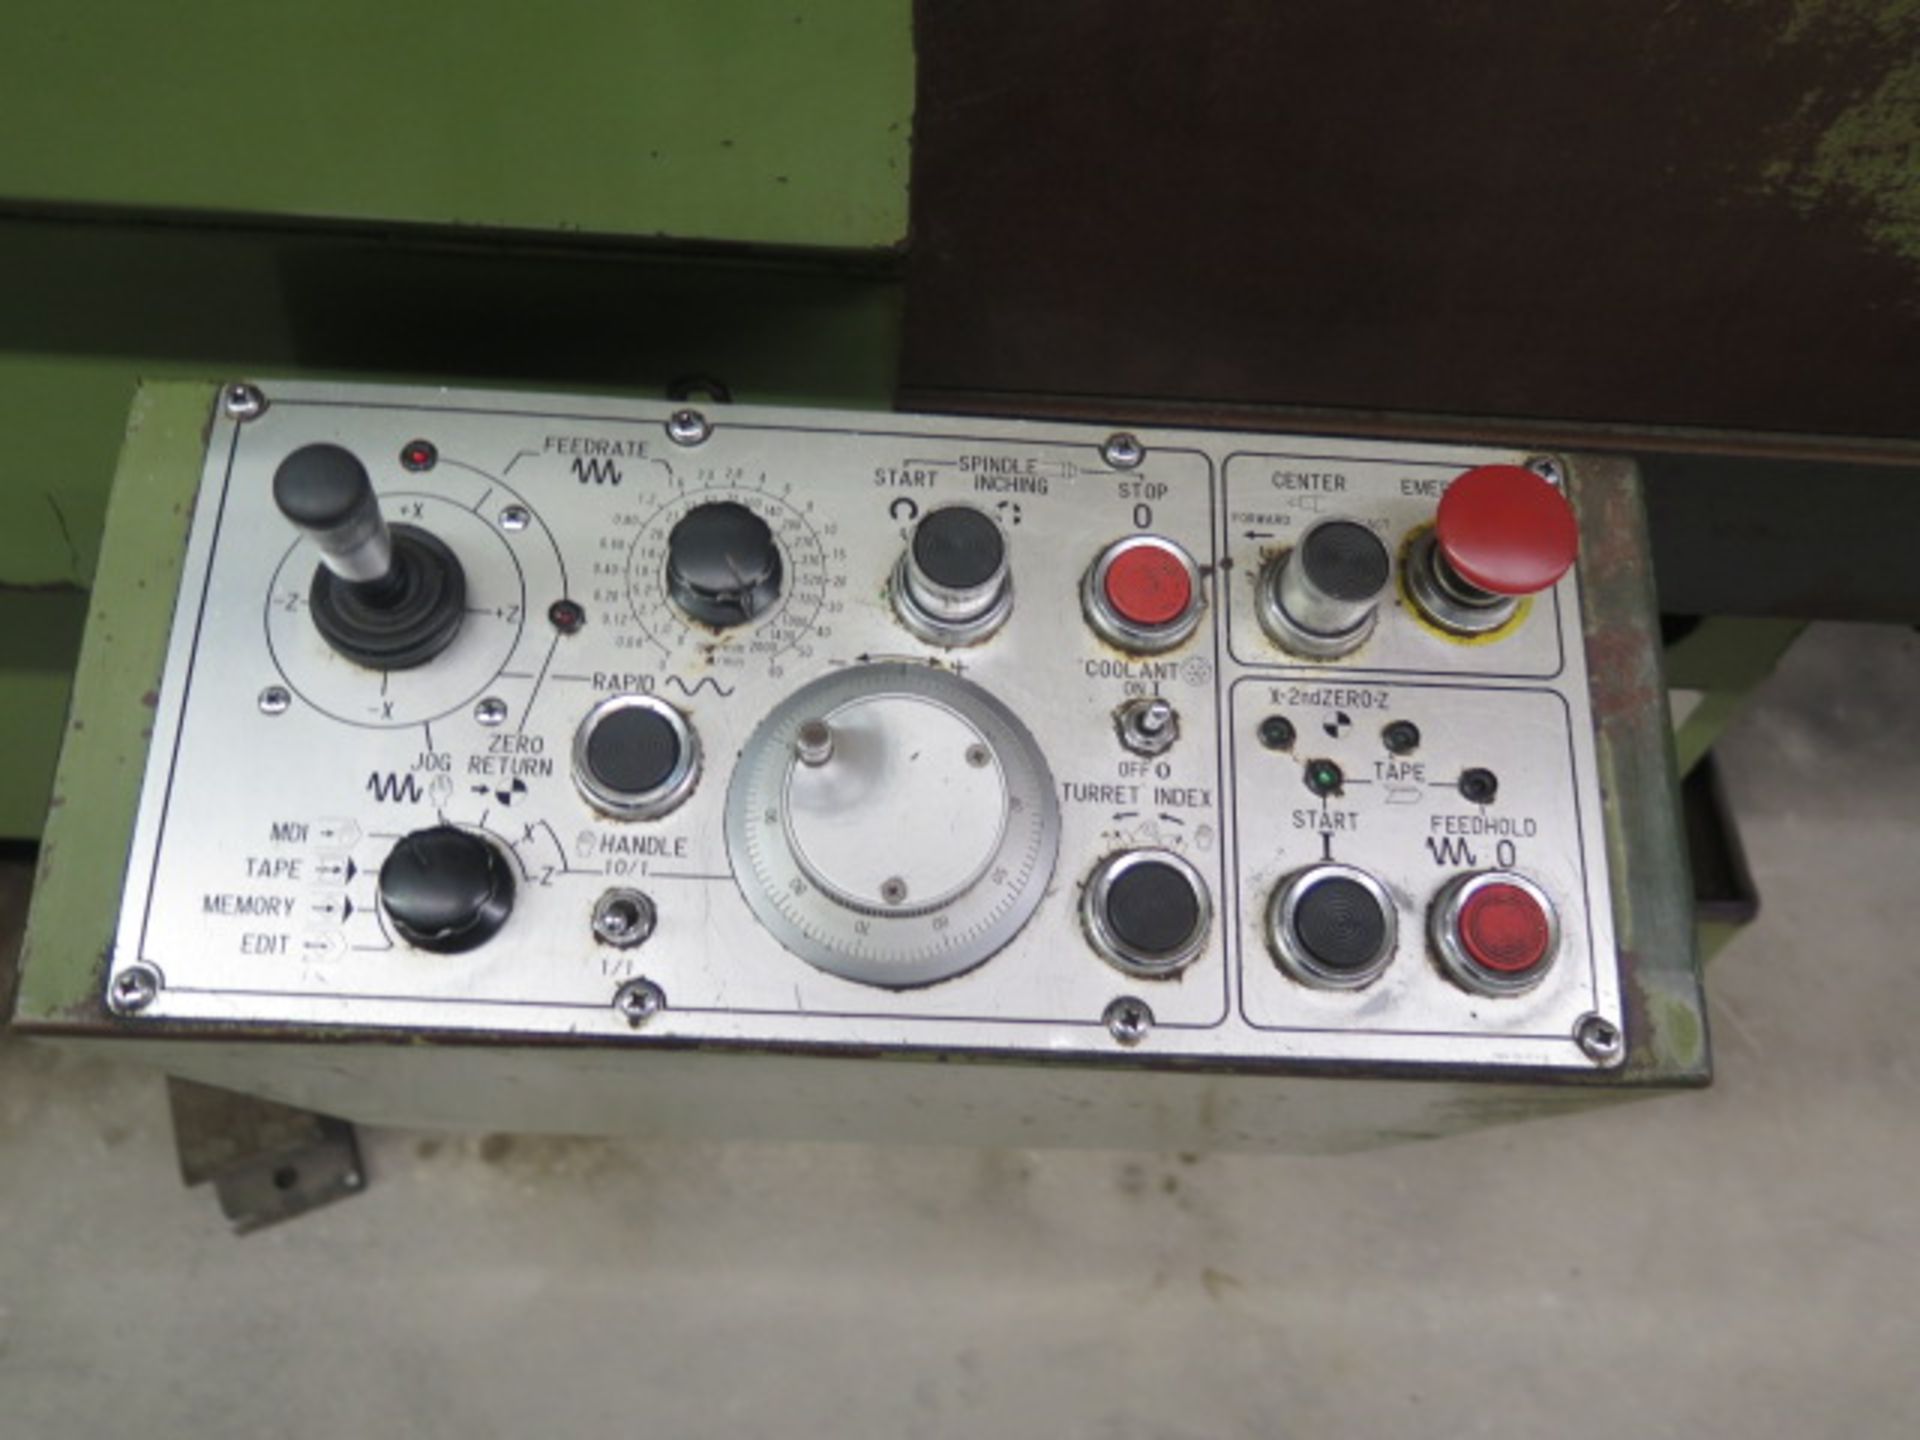 Hitachi Seiki 4NE-600 CNC Turning Center s/n NE-41405 w/ Fanuc System 6T Controls, 12-Station - Image 8 of 11